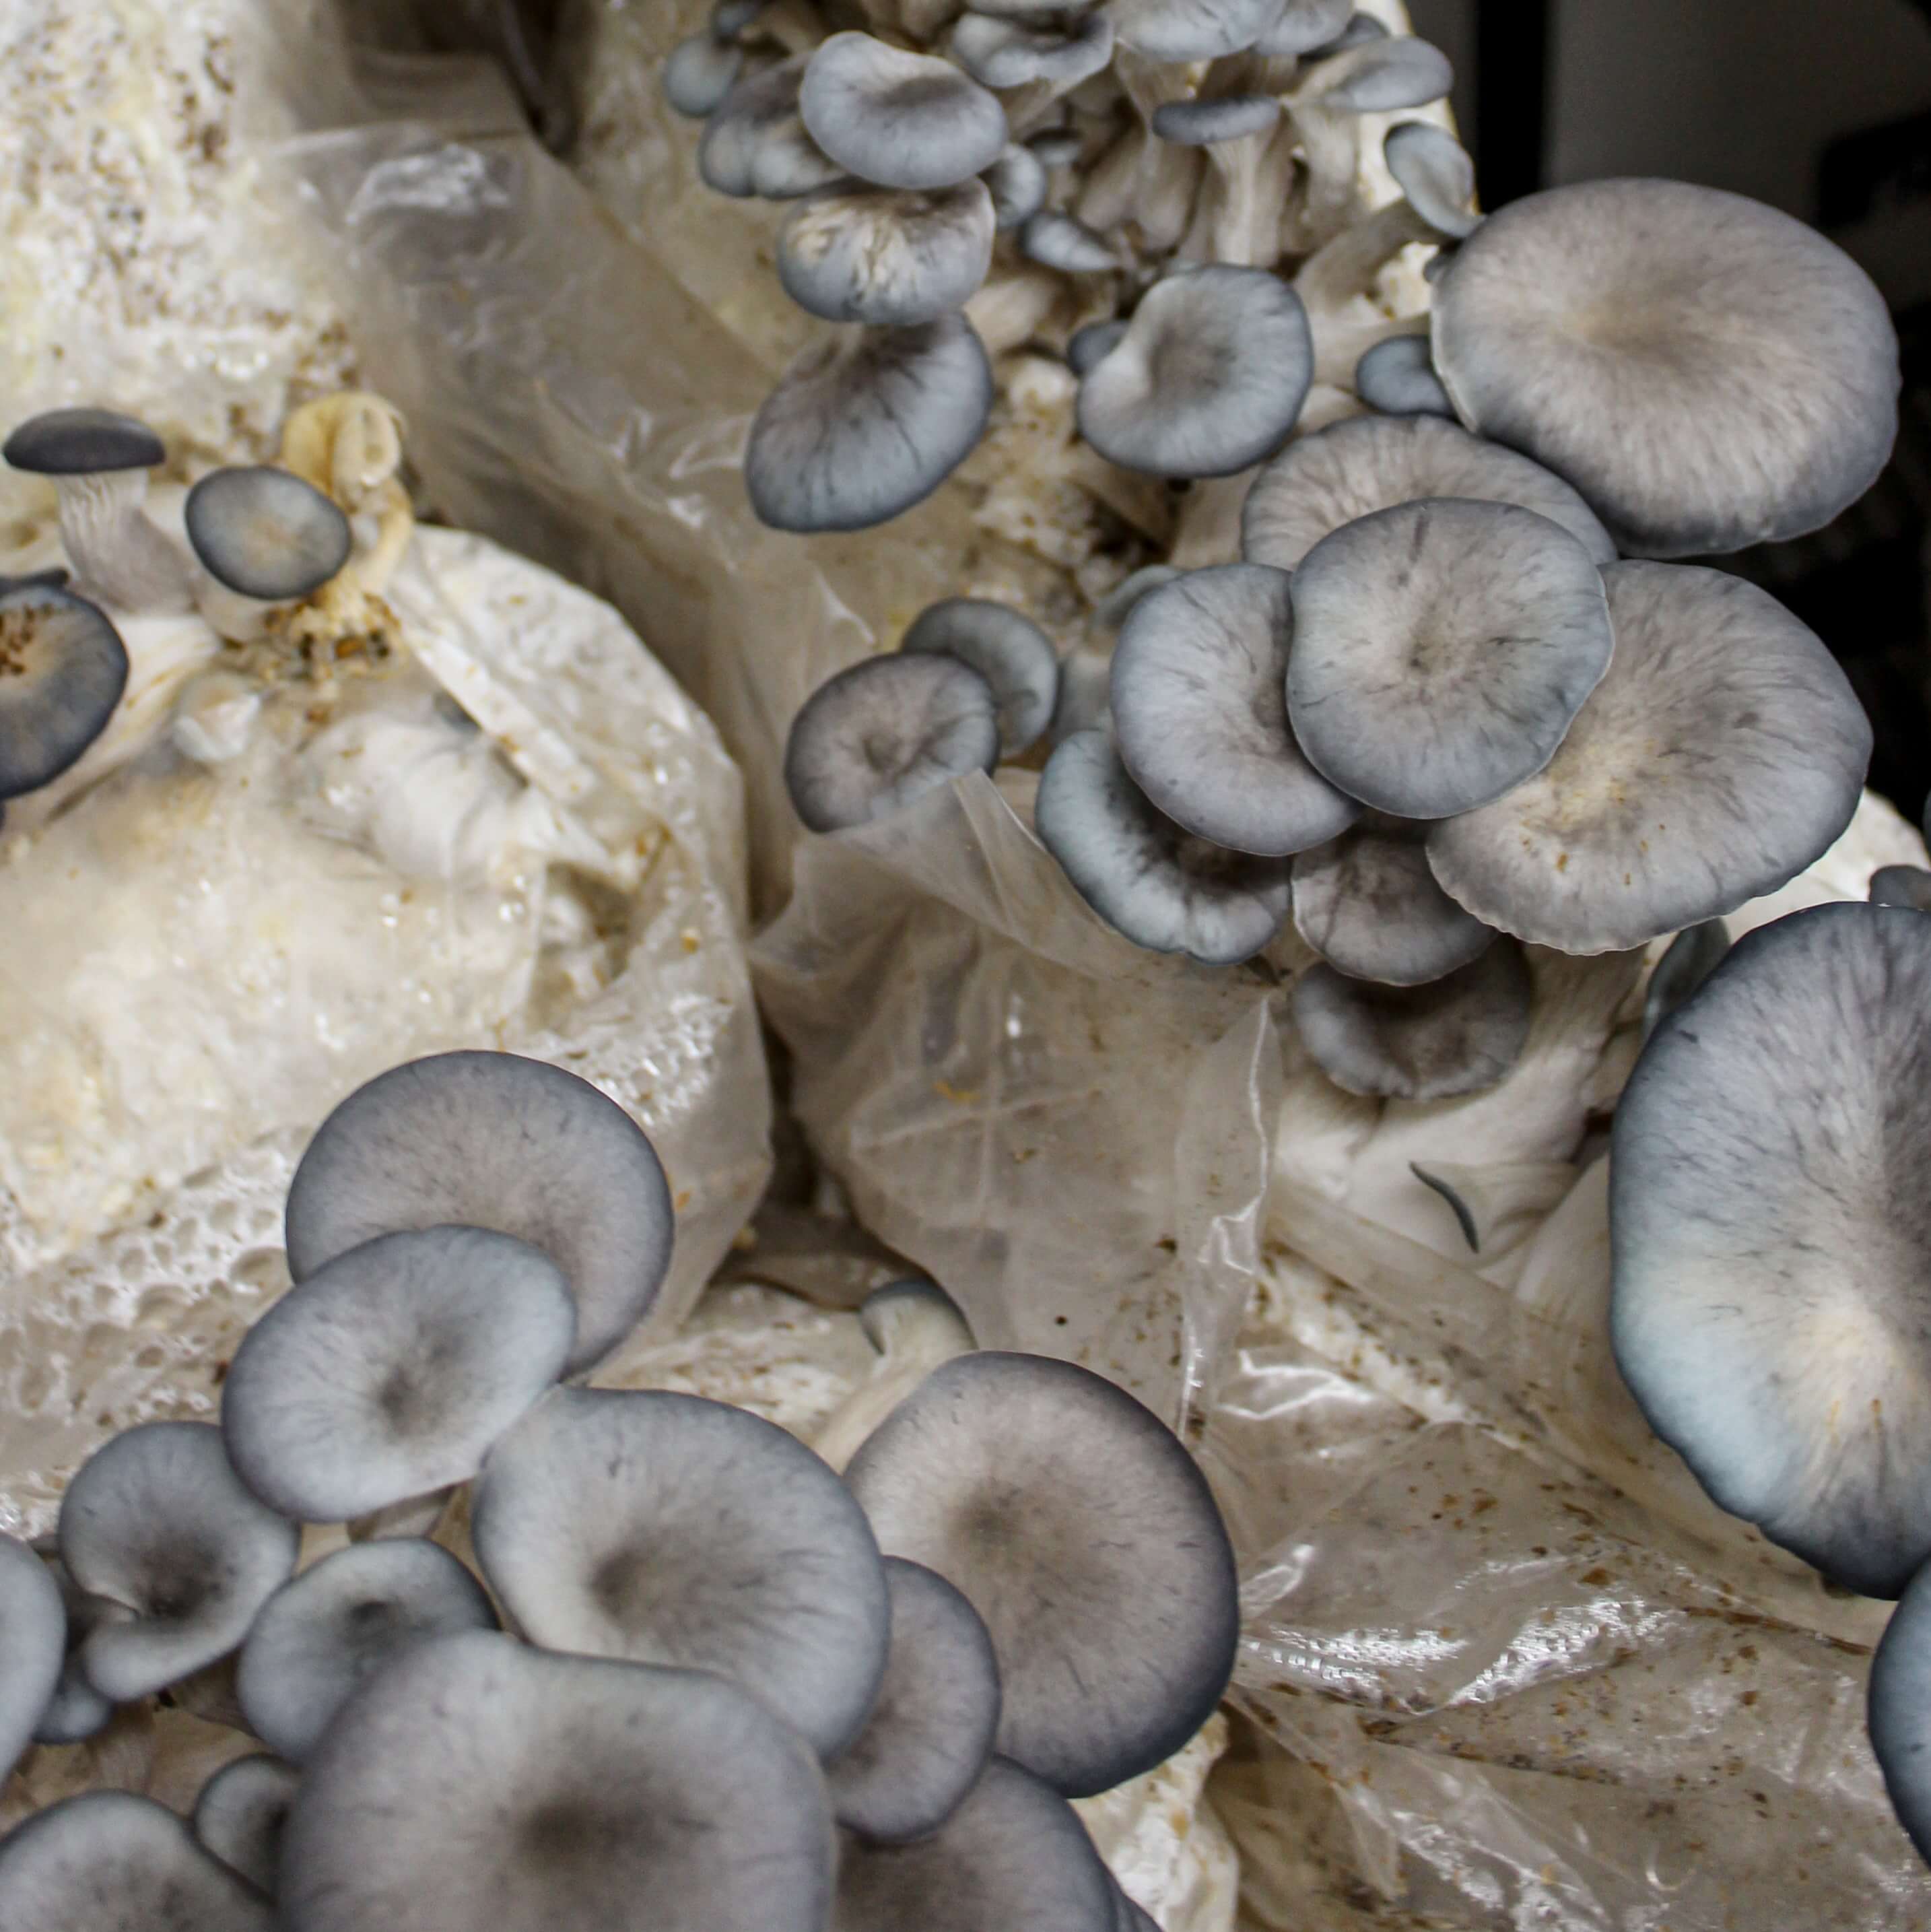 Blue Oyster Mushroom Growing Kit -30%